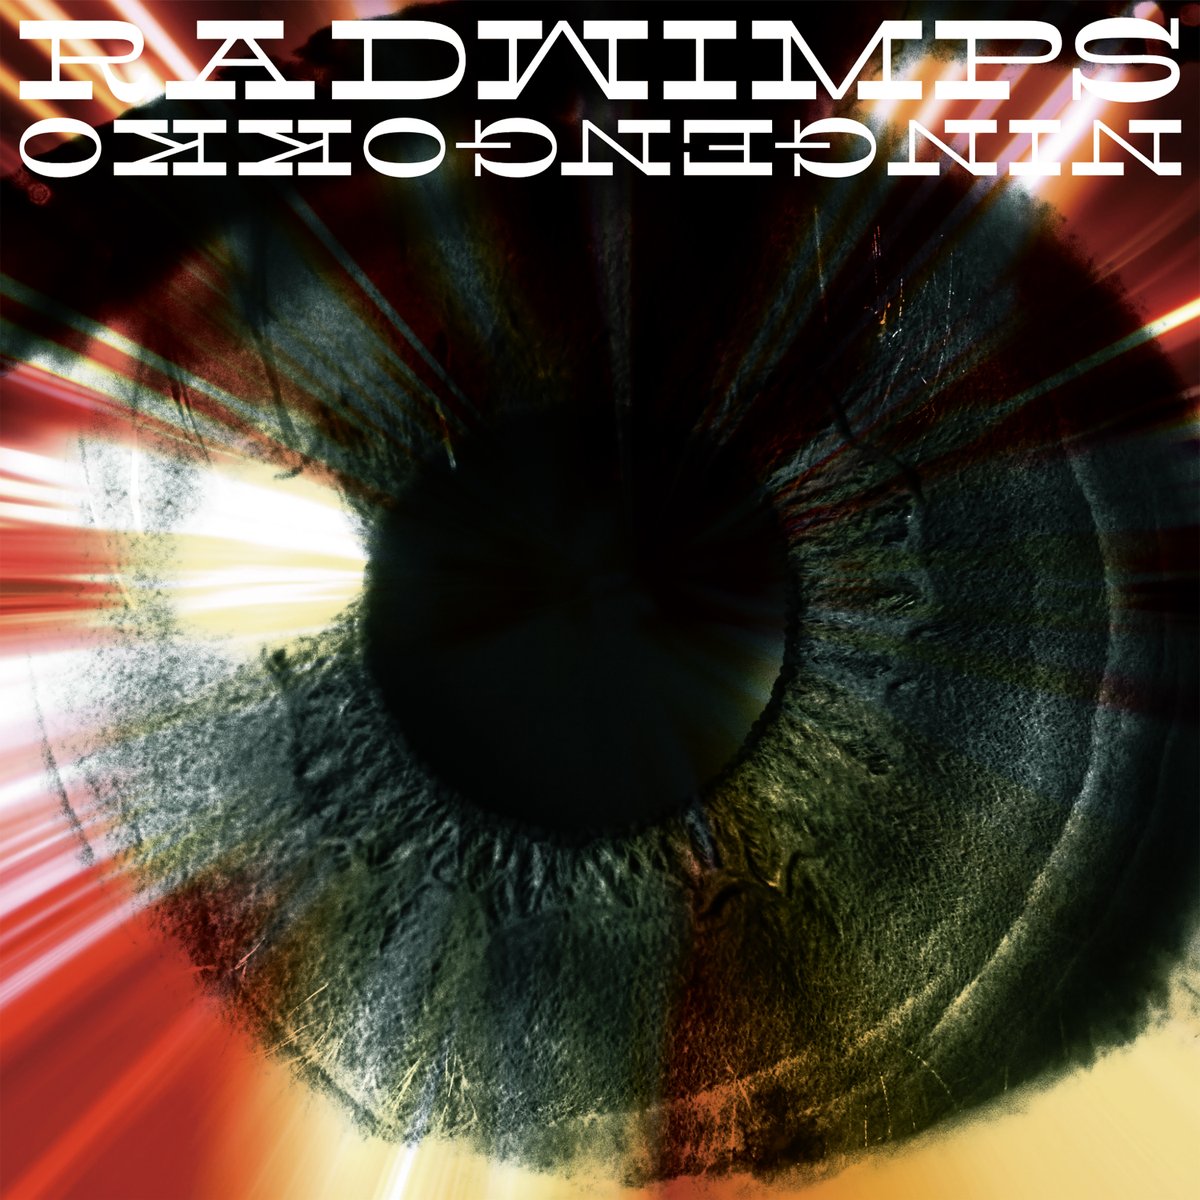 『RADWIMPS - 祝祭 (Movie edit) feat.三浦透子』収録の『天気の子』ジャケット